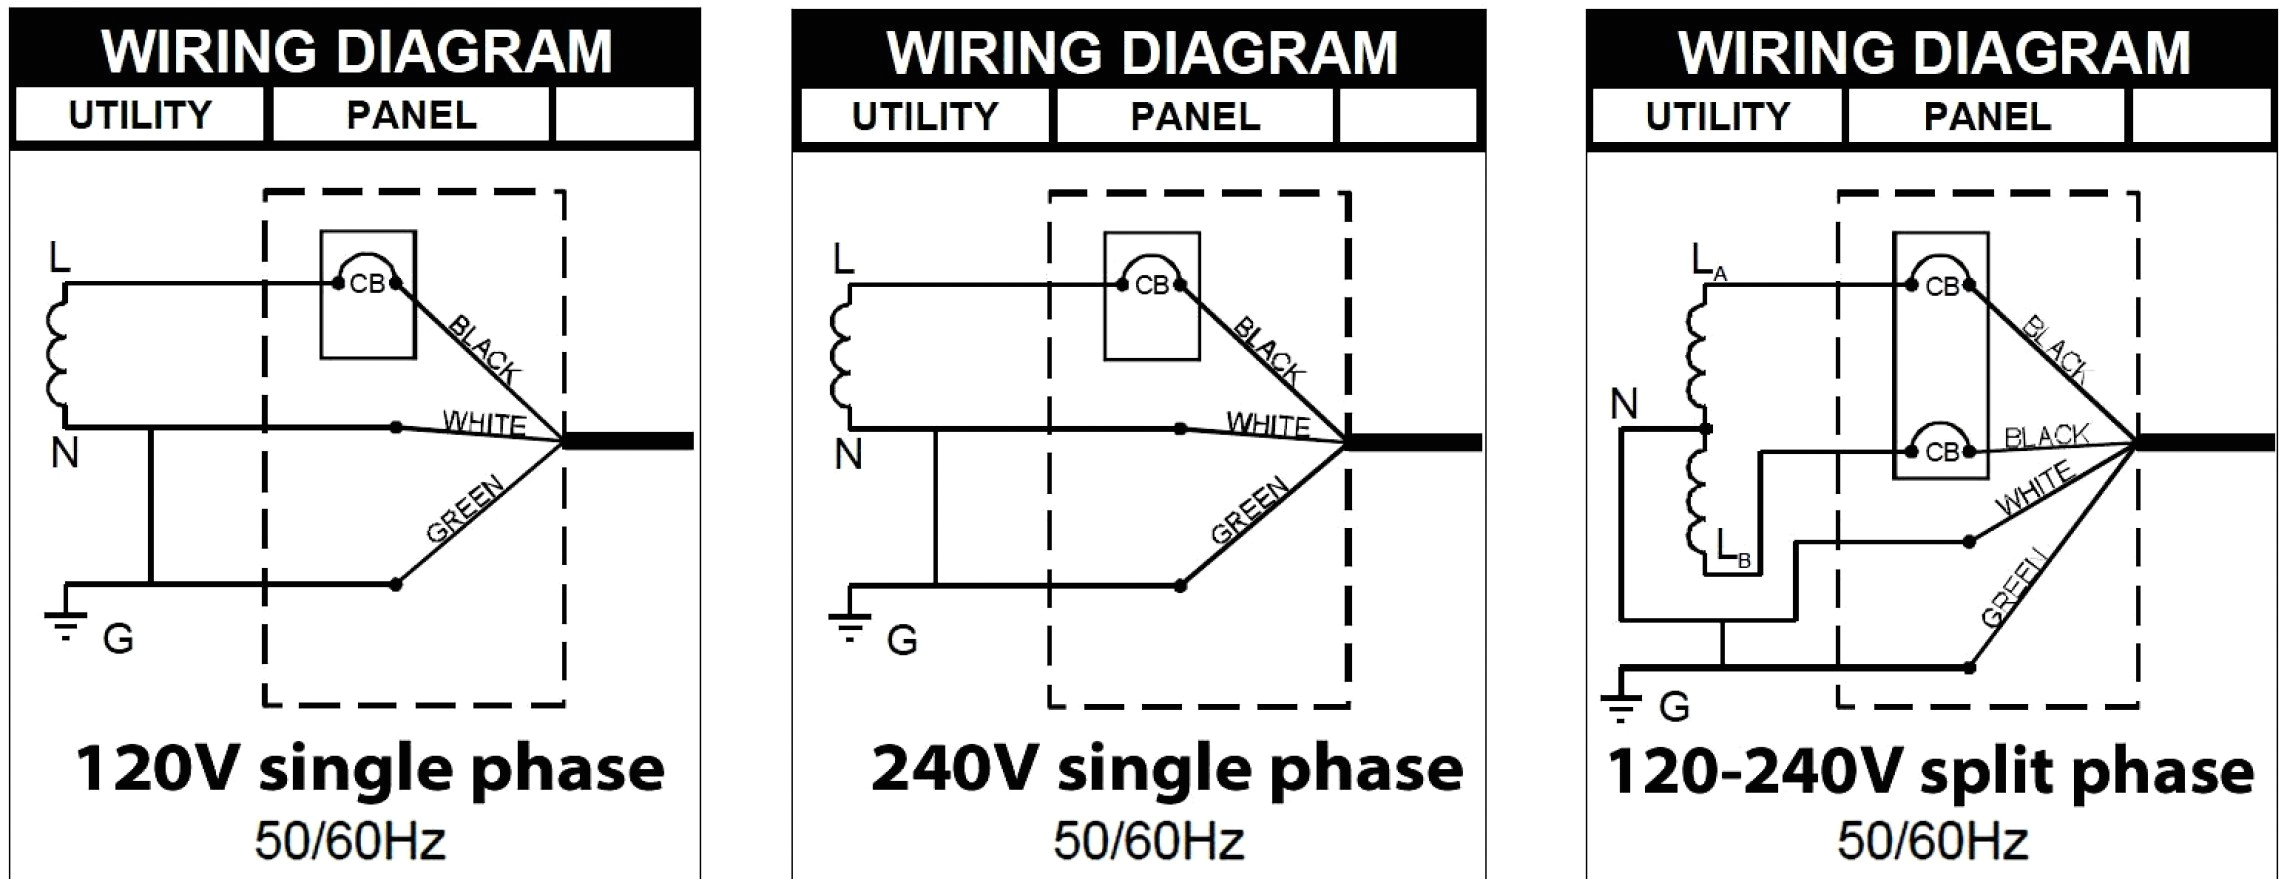 motor wiring 3 phase 208 220 480 wiring diagram operations 208 volt motor wiring wiring diagrams